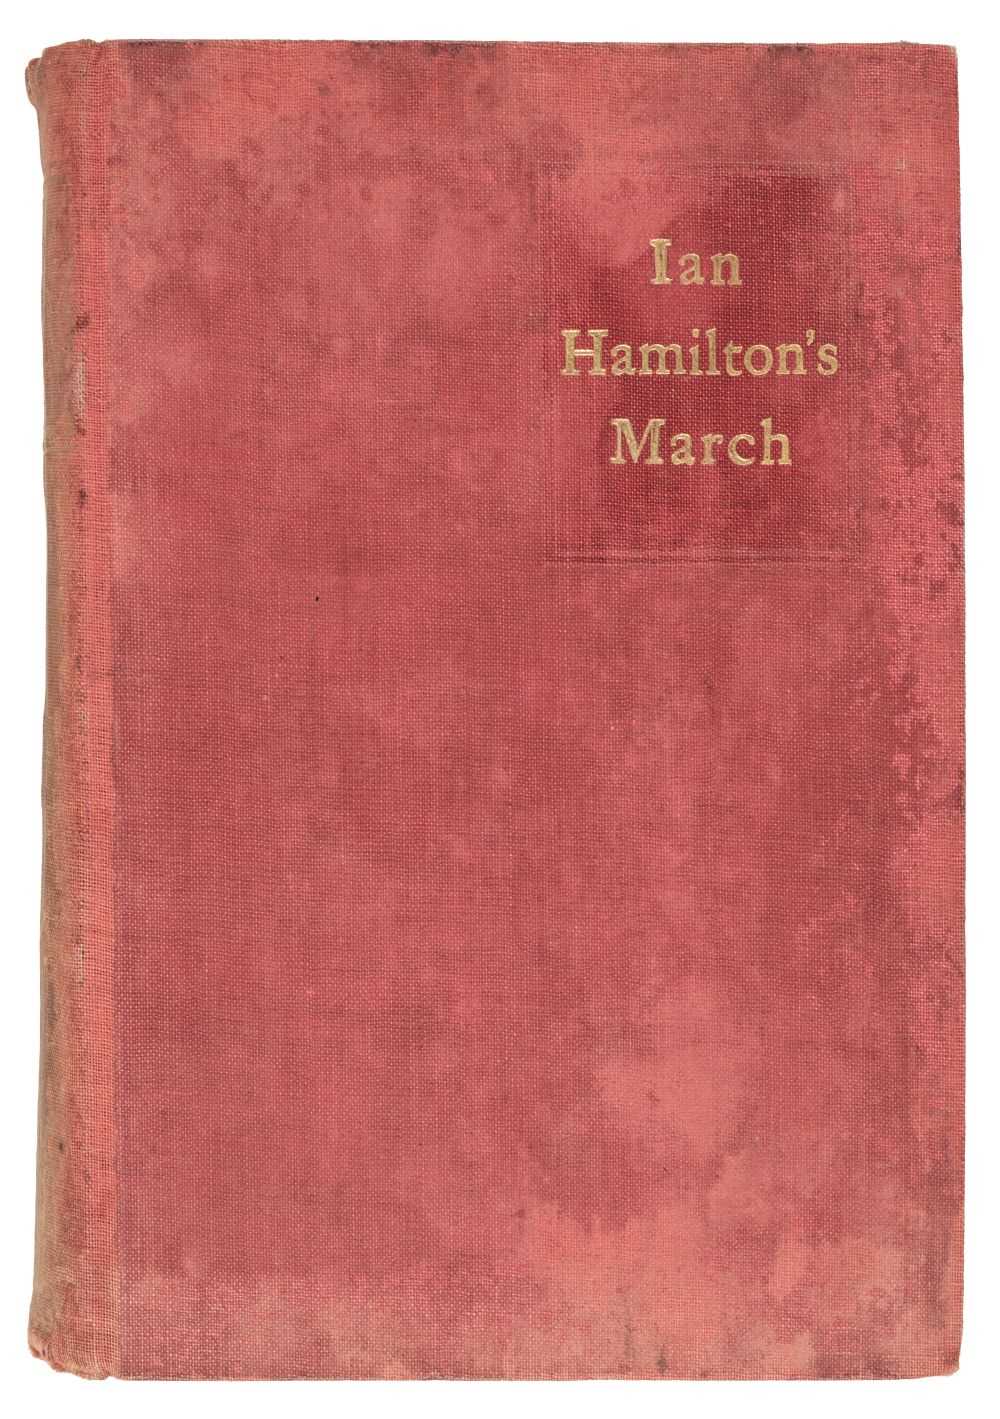 Lot 3 - Churchill (Winston Spencer). Ian Hamilton's March, 1st edition, 1900